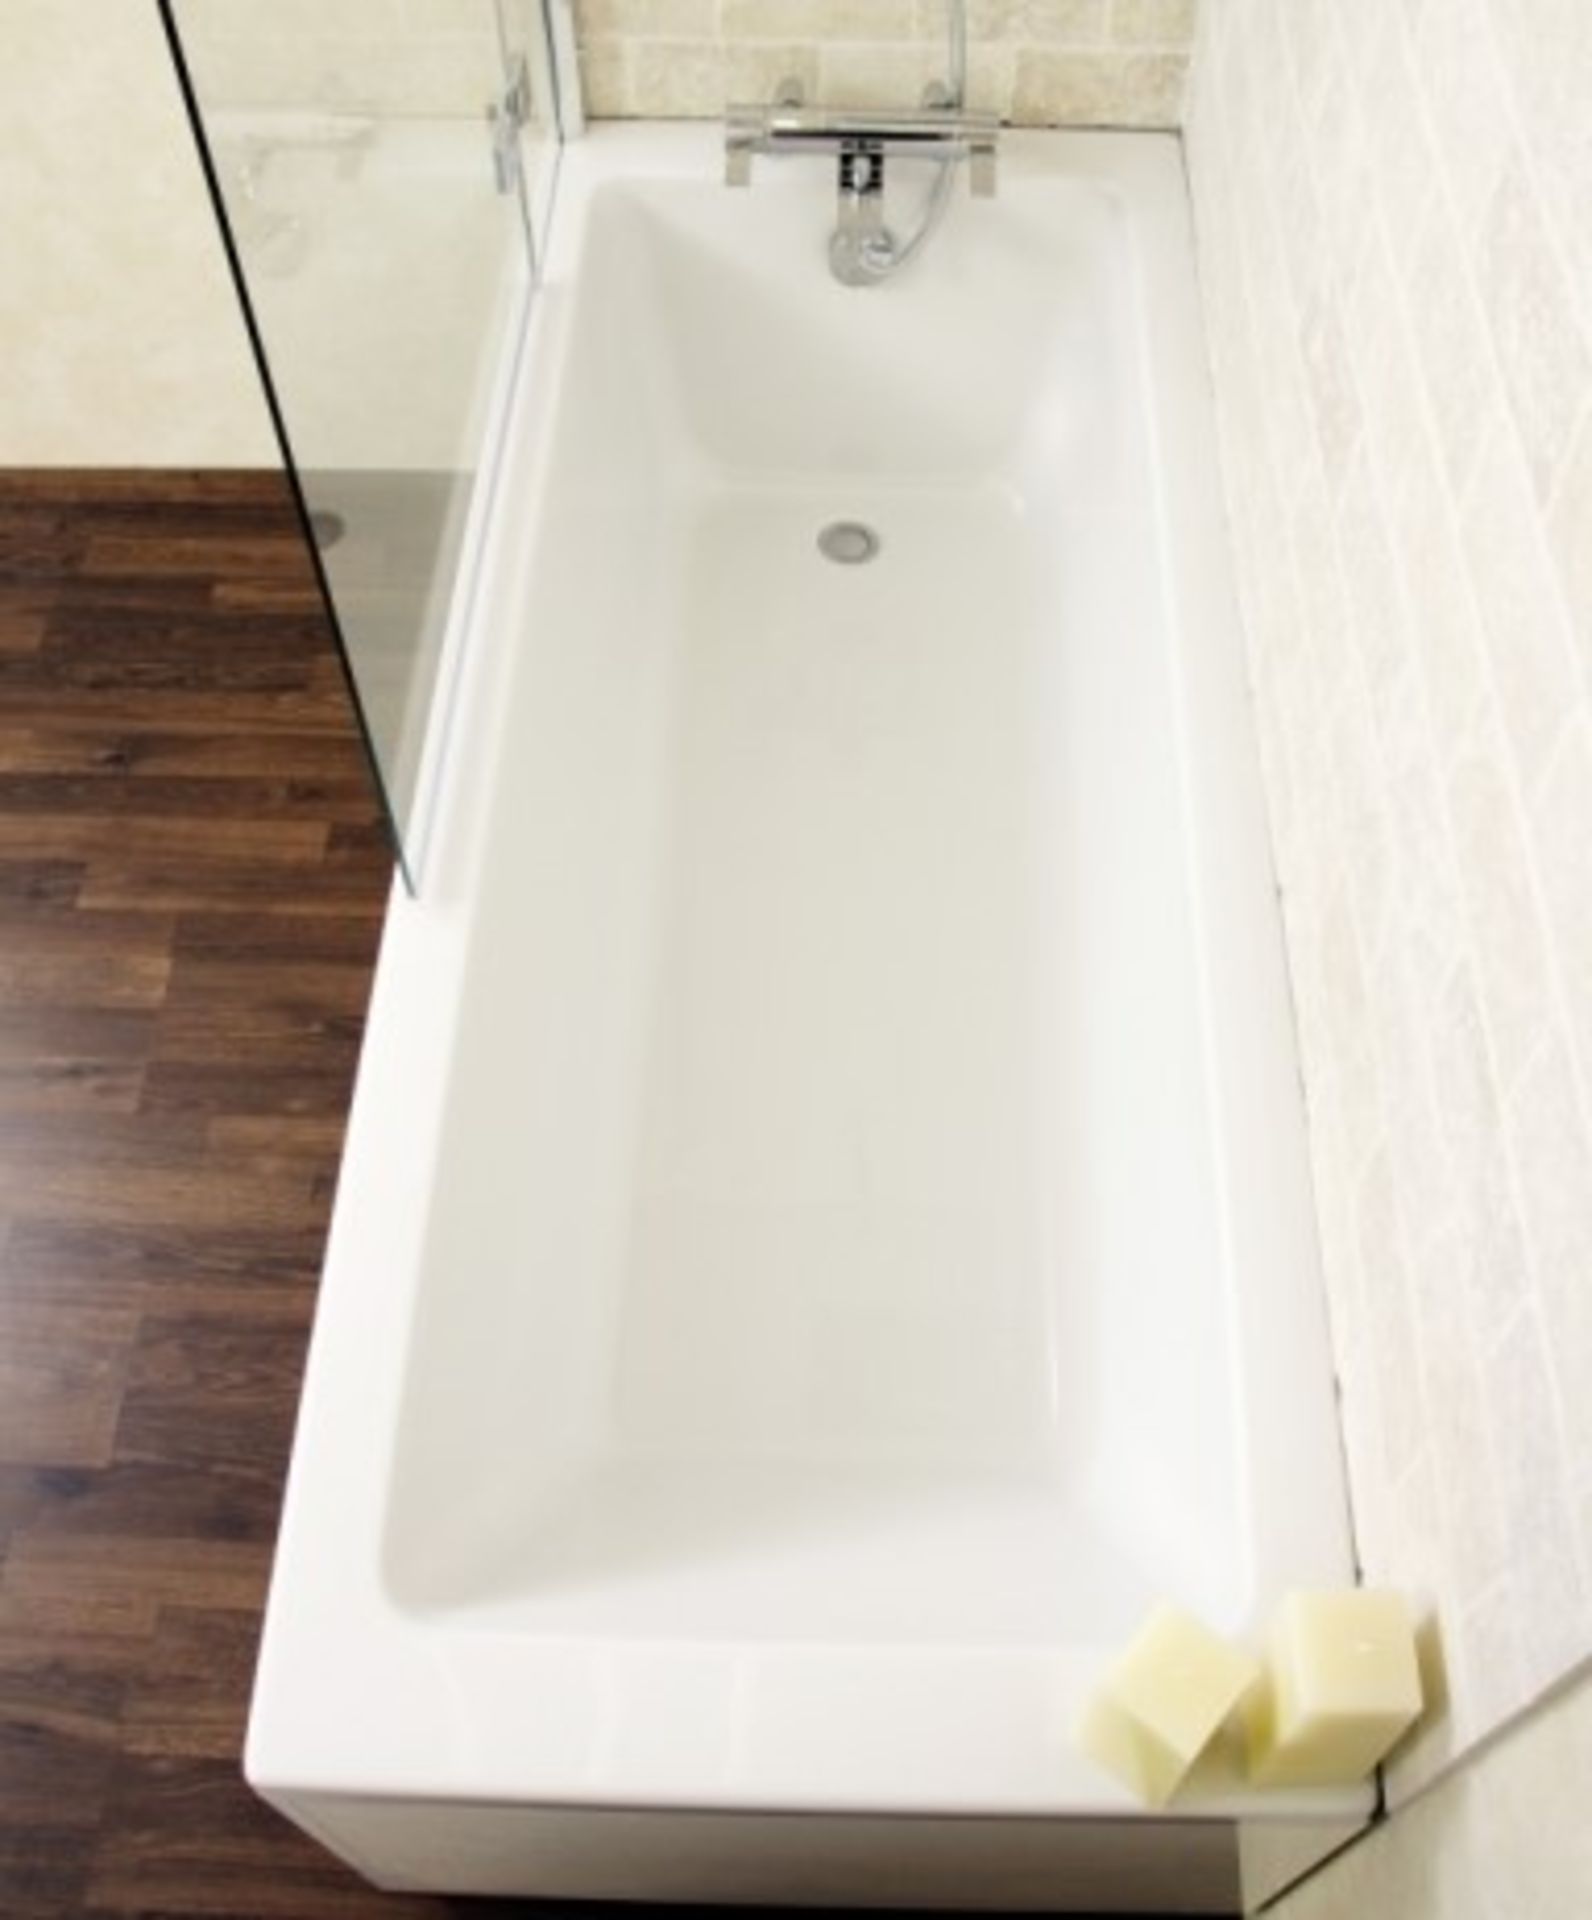 1 x Dovcor Tolima 1700 x 750 Single Acrylic End Bath - Includes Screen - D.001.003.SE - Corensis